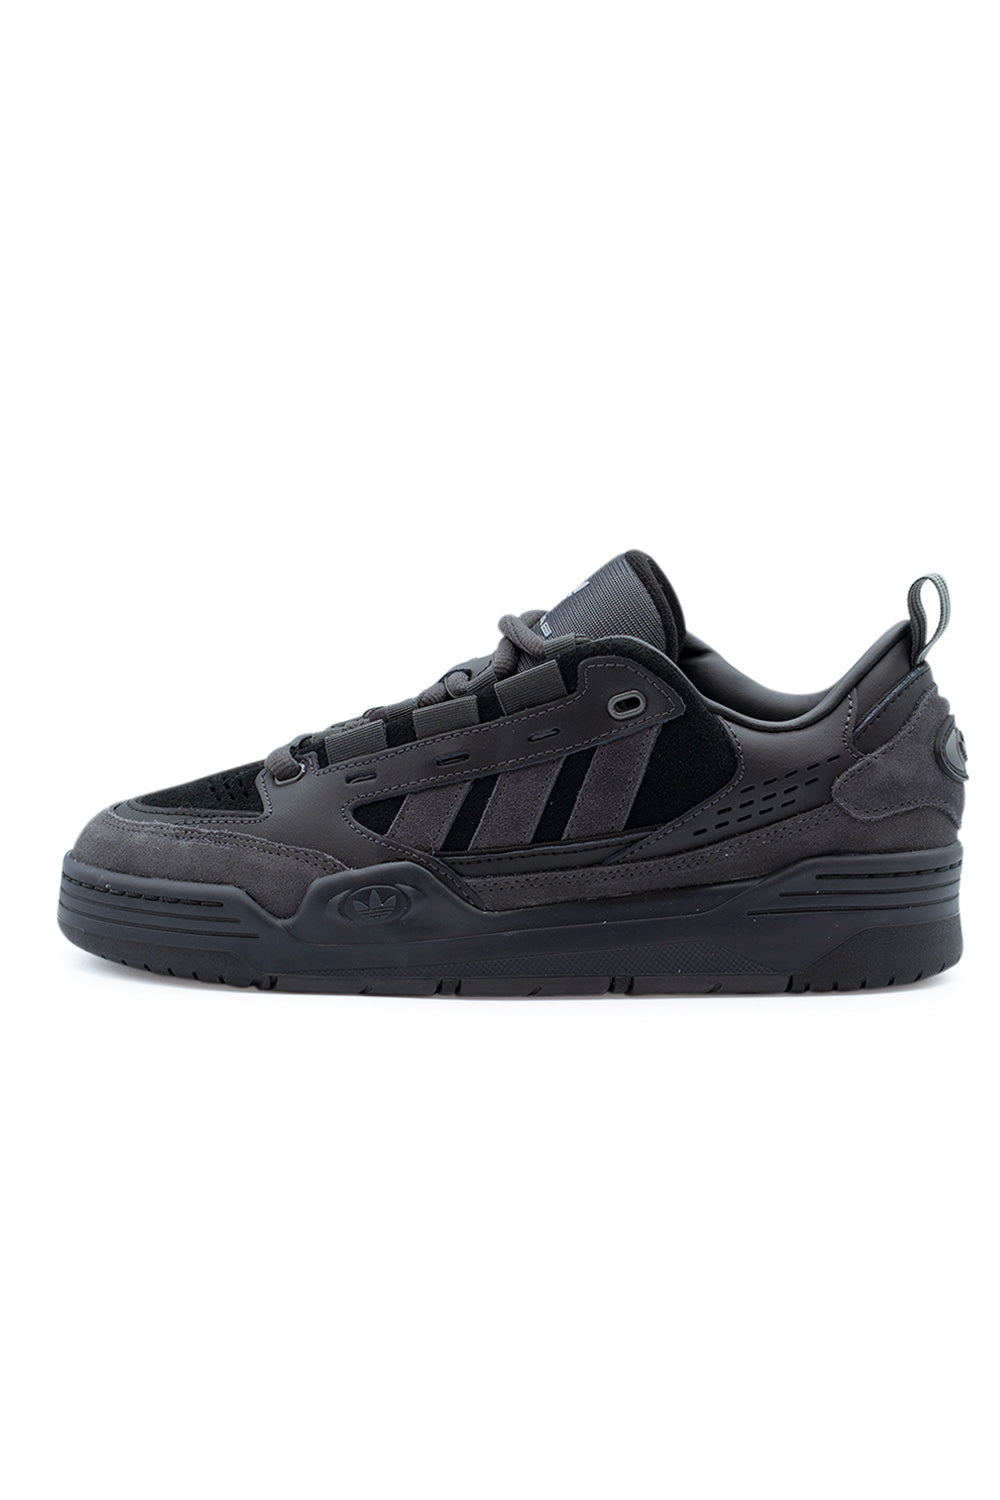 Adidas Adi2000 Shoe Core Black / Utility Black / Utility Black - BONKERS